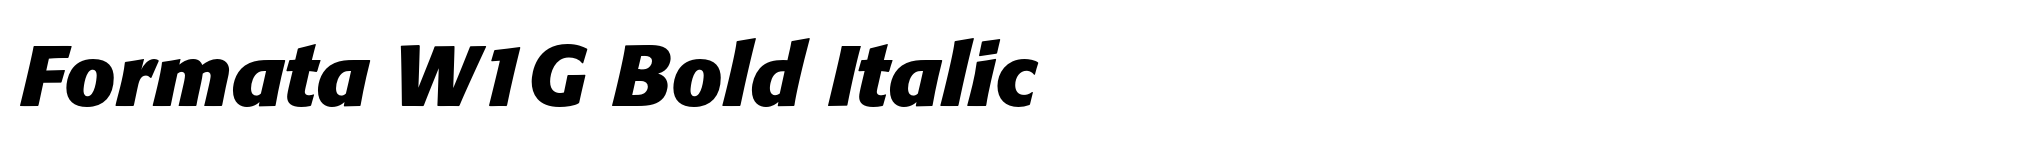 Formata W1G Bold Italic image